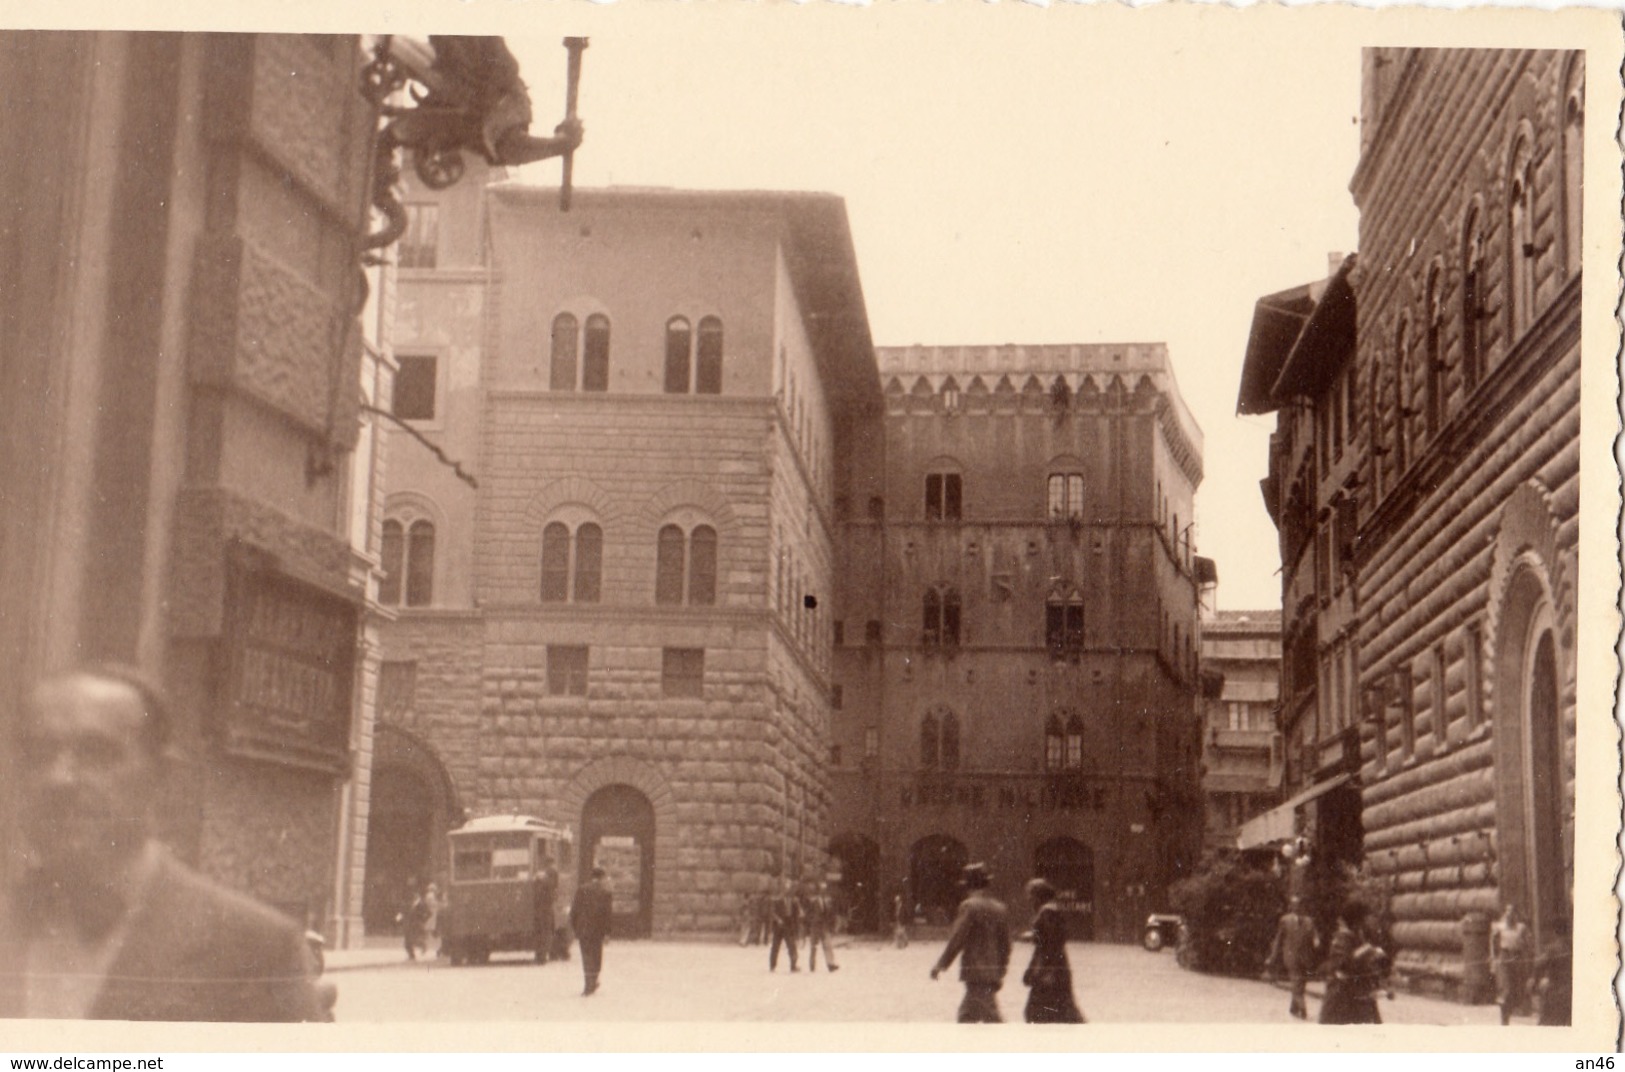 Firenze-Cartolina Fotpgrafica-Originale 100%an1 - Firenze (Florence)